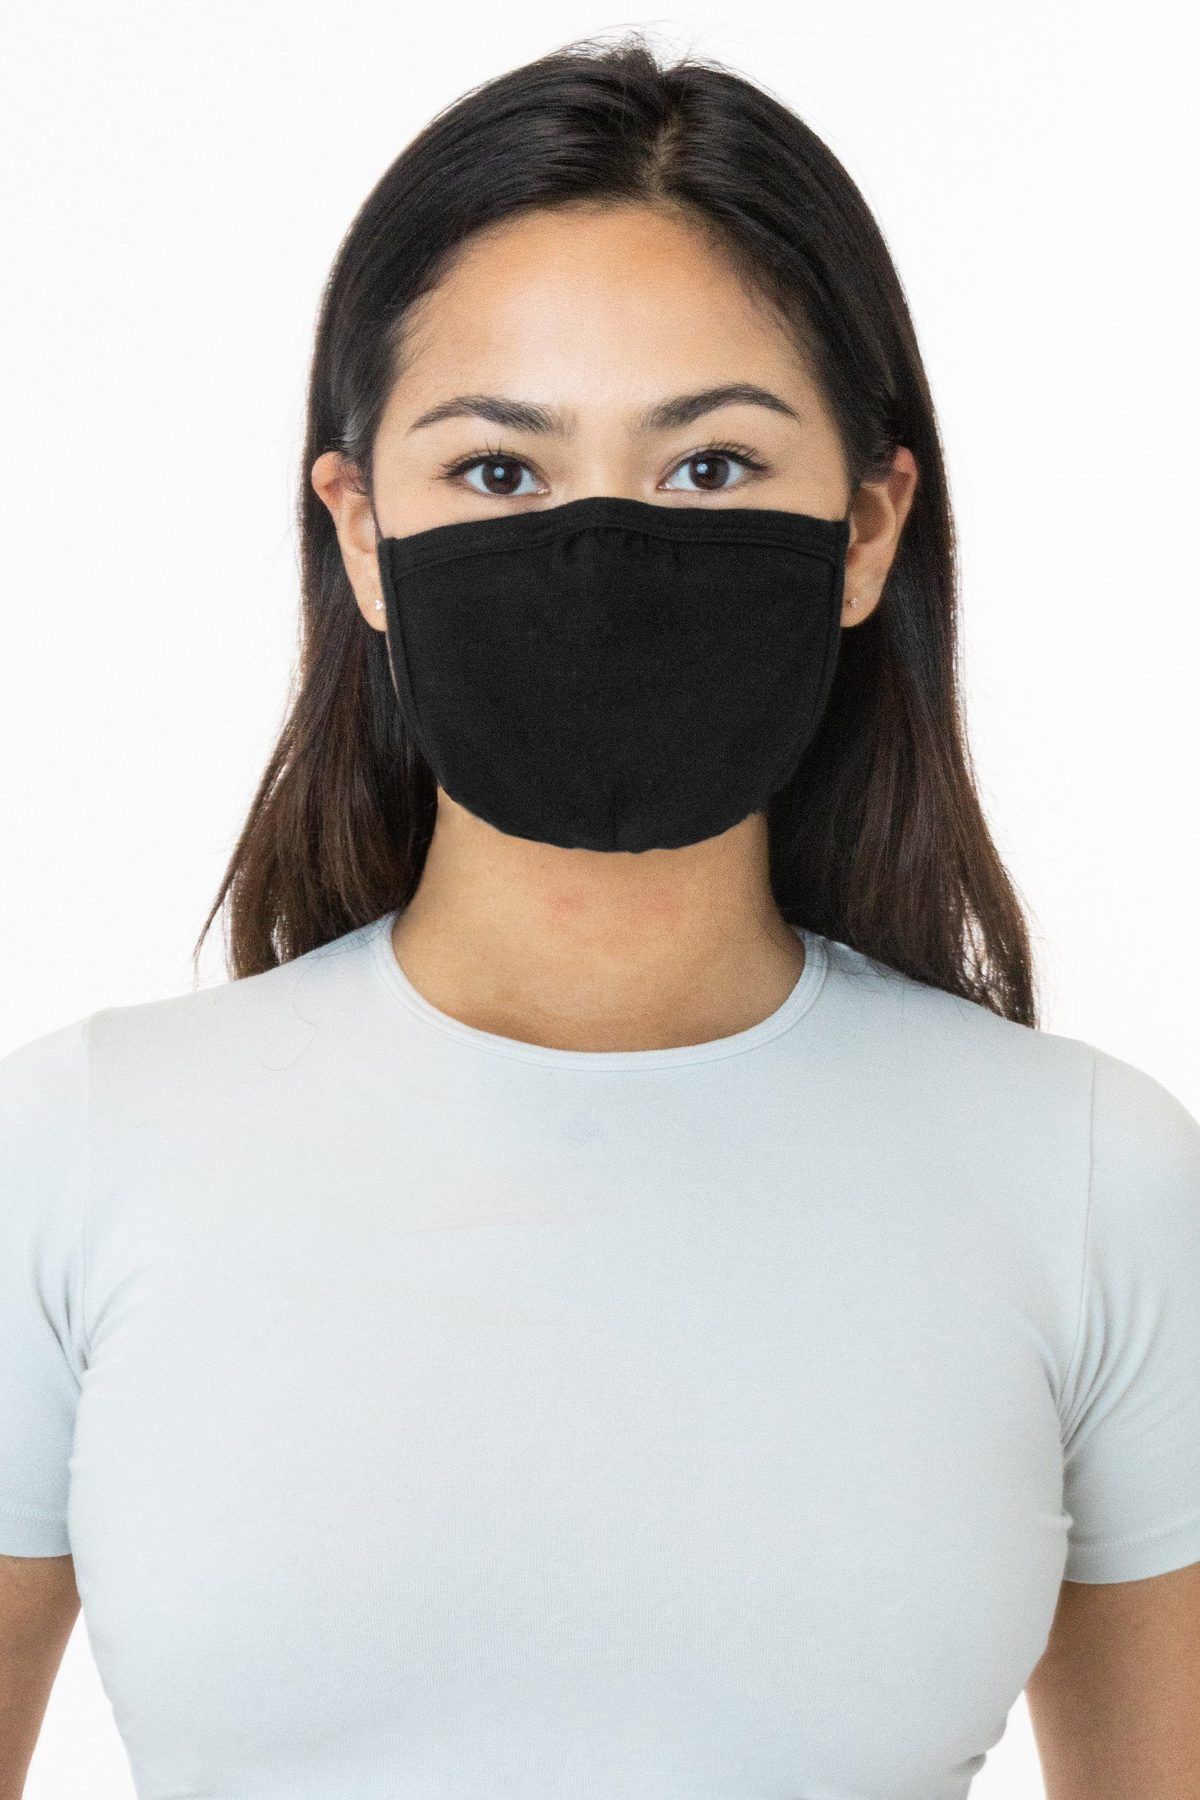 facial mask for women